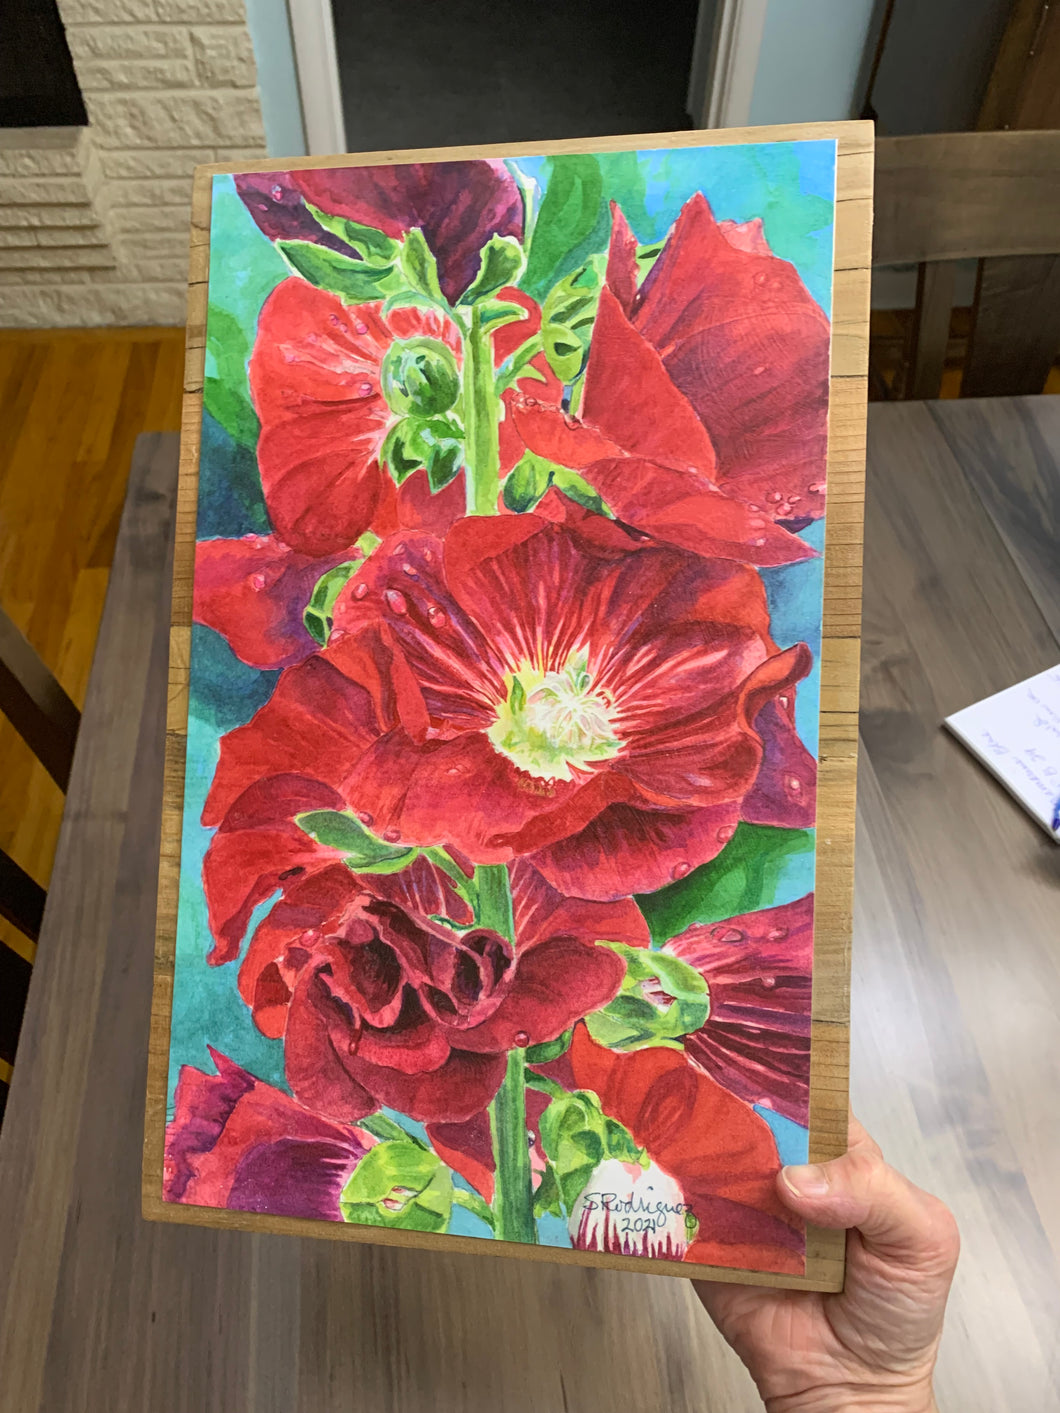 Red Hollyhocks Print, mounted on repurposed board